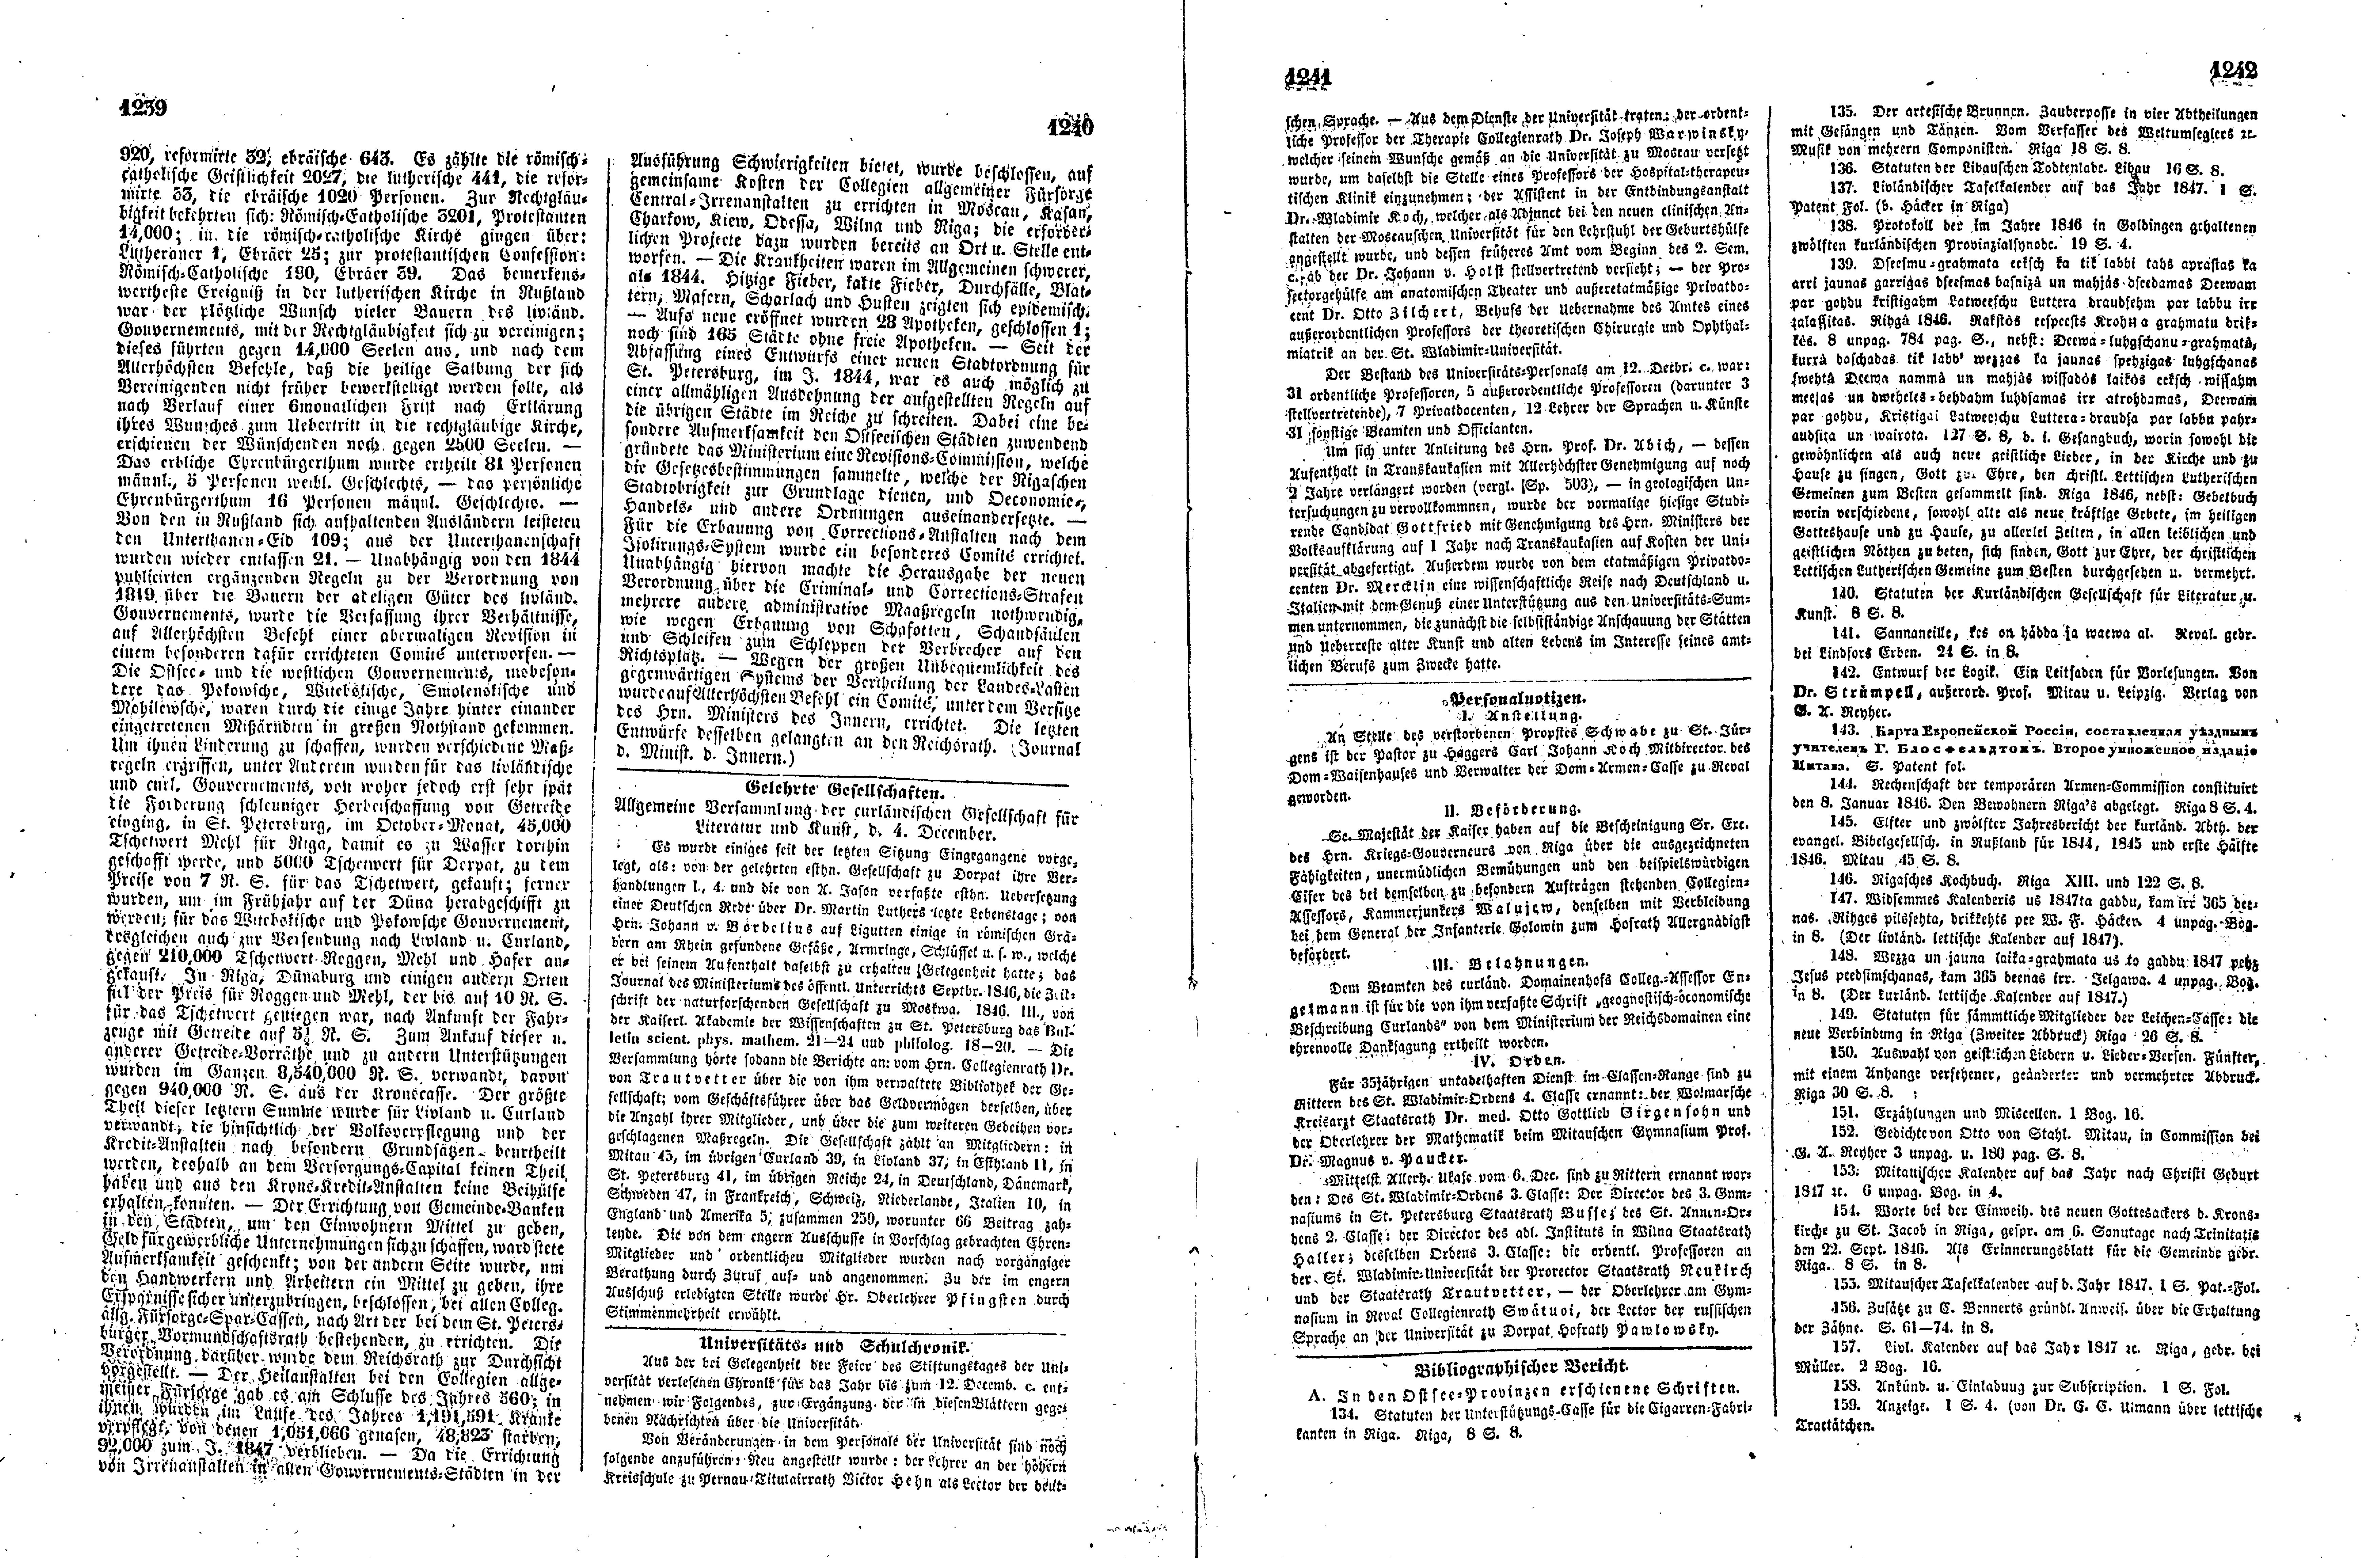 Das Inland [11] (1846) | 315. (1239-1242) Main body of text